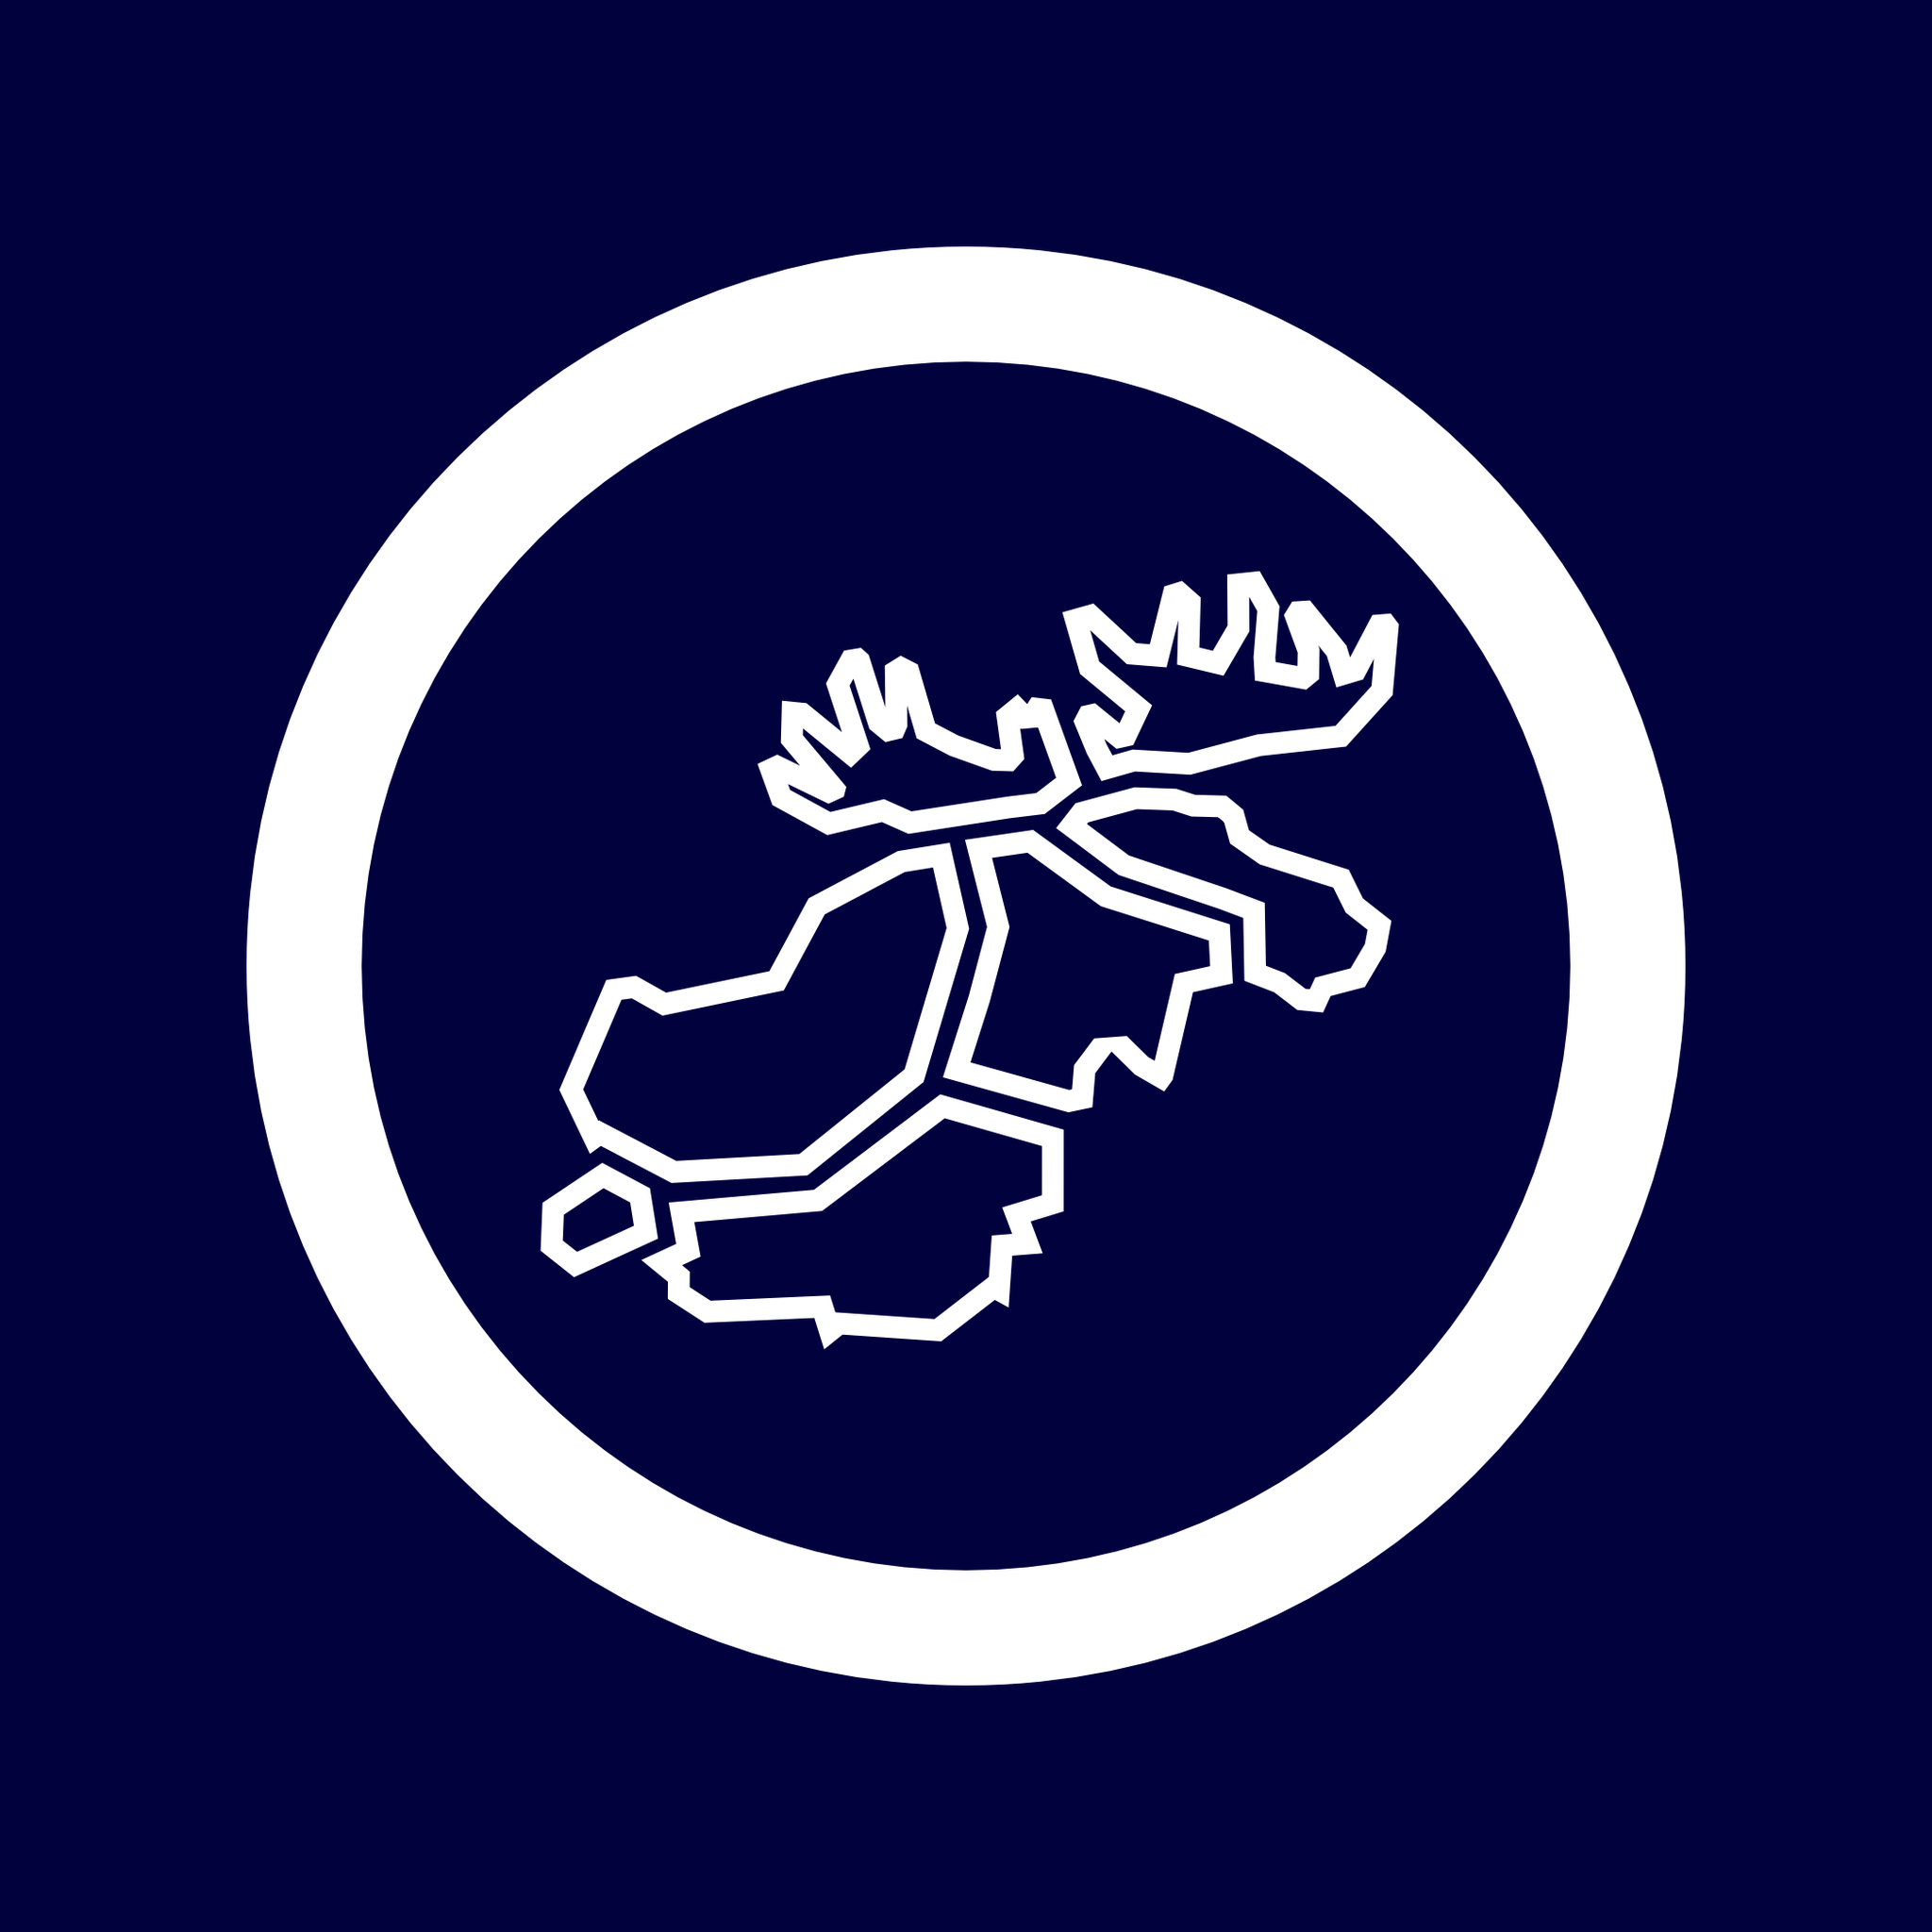 Bull Moose Victory logo